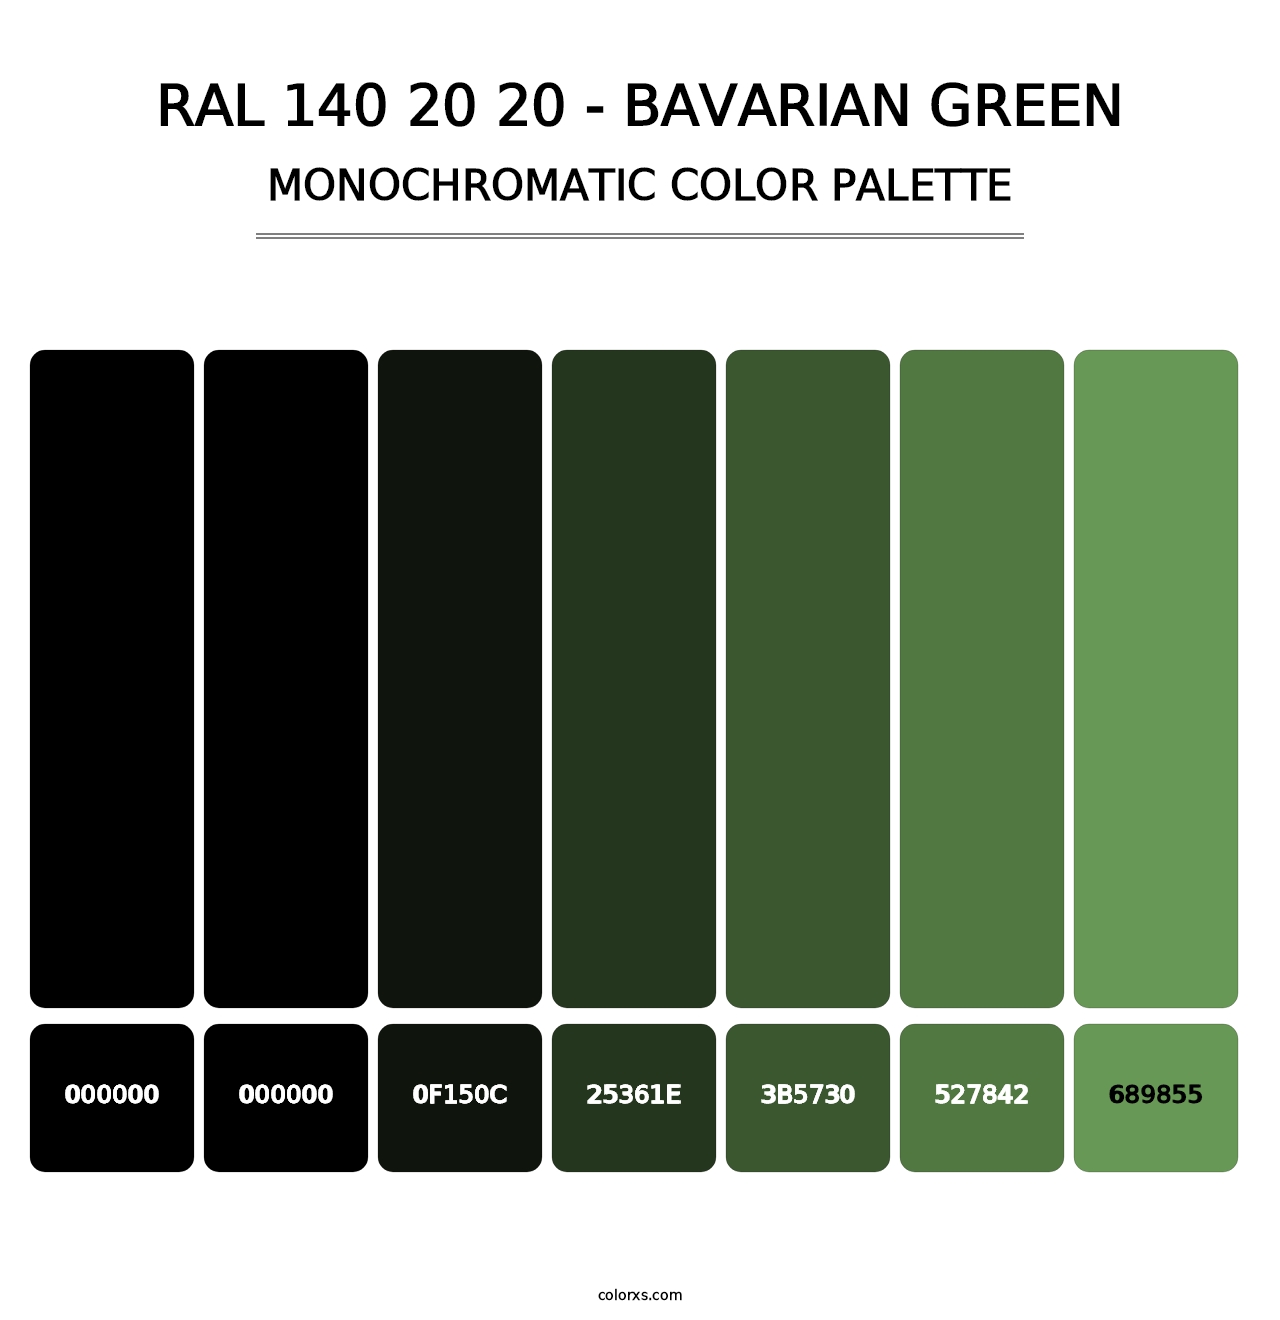 RAL 140 20 20 - Bavarian Green - Monochromatic Color Palette